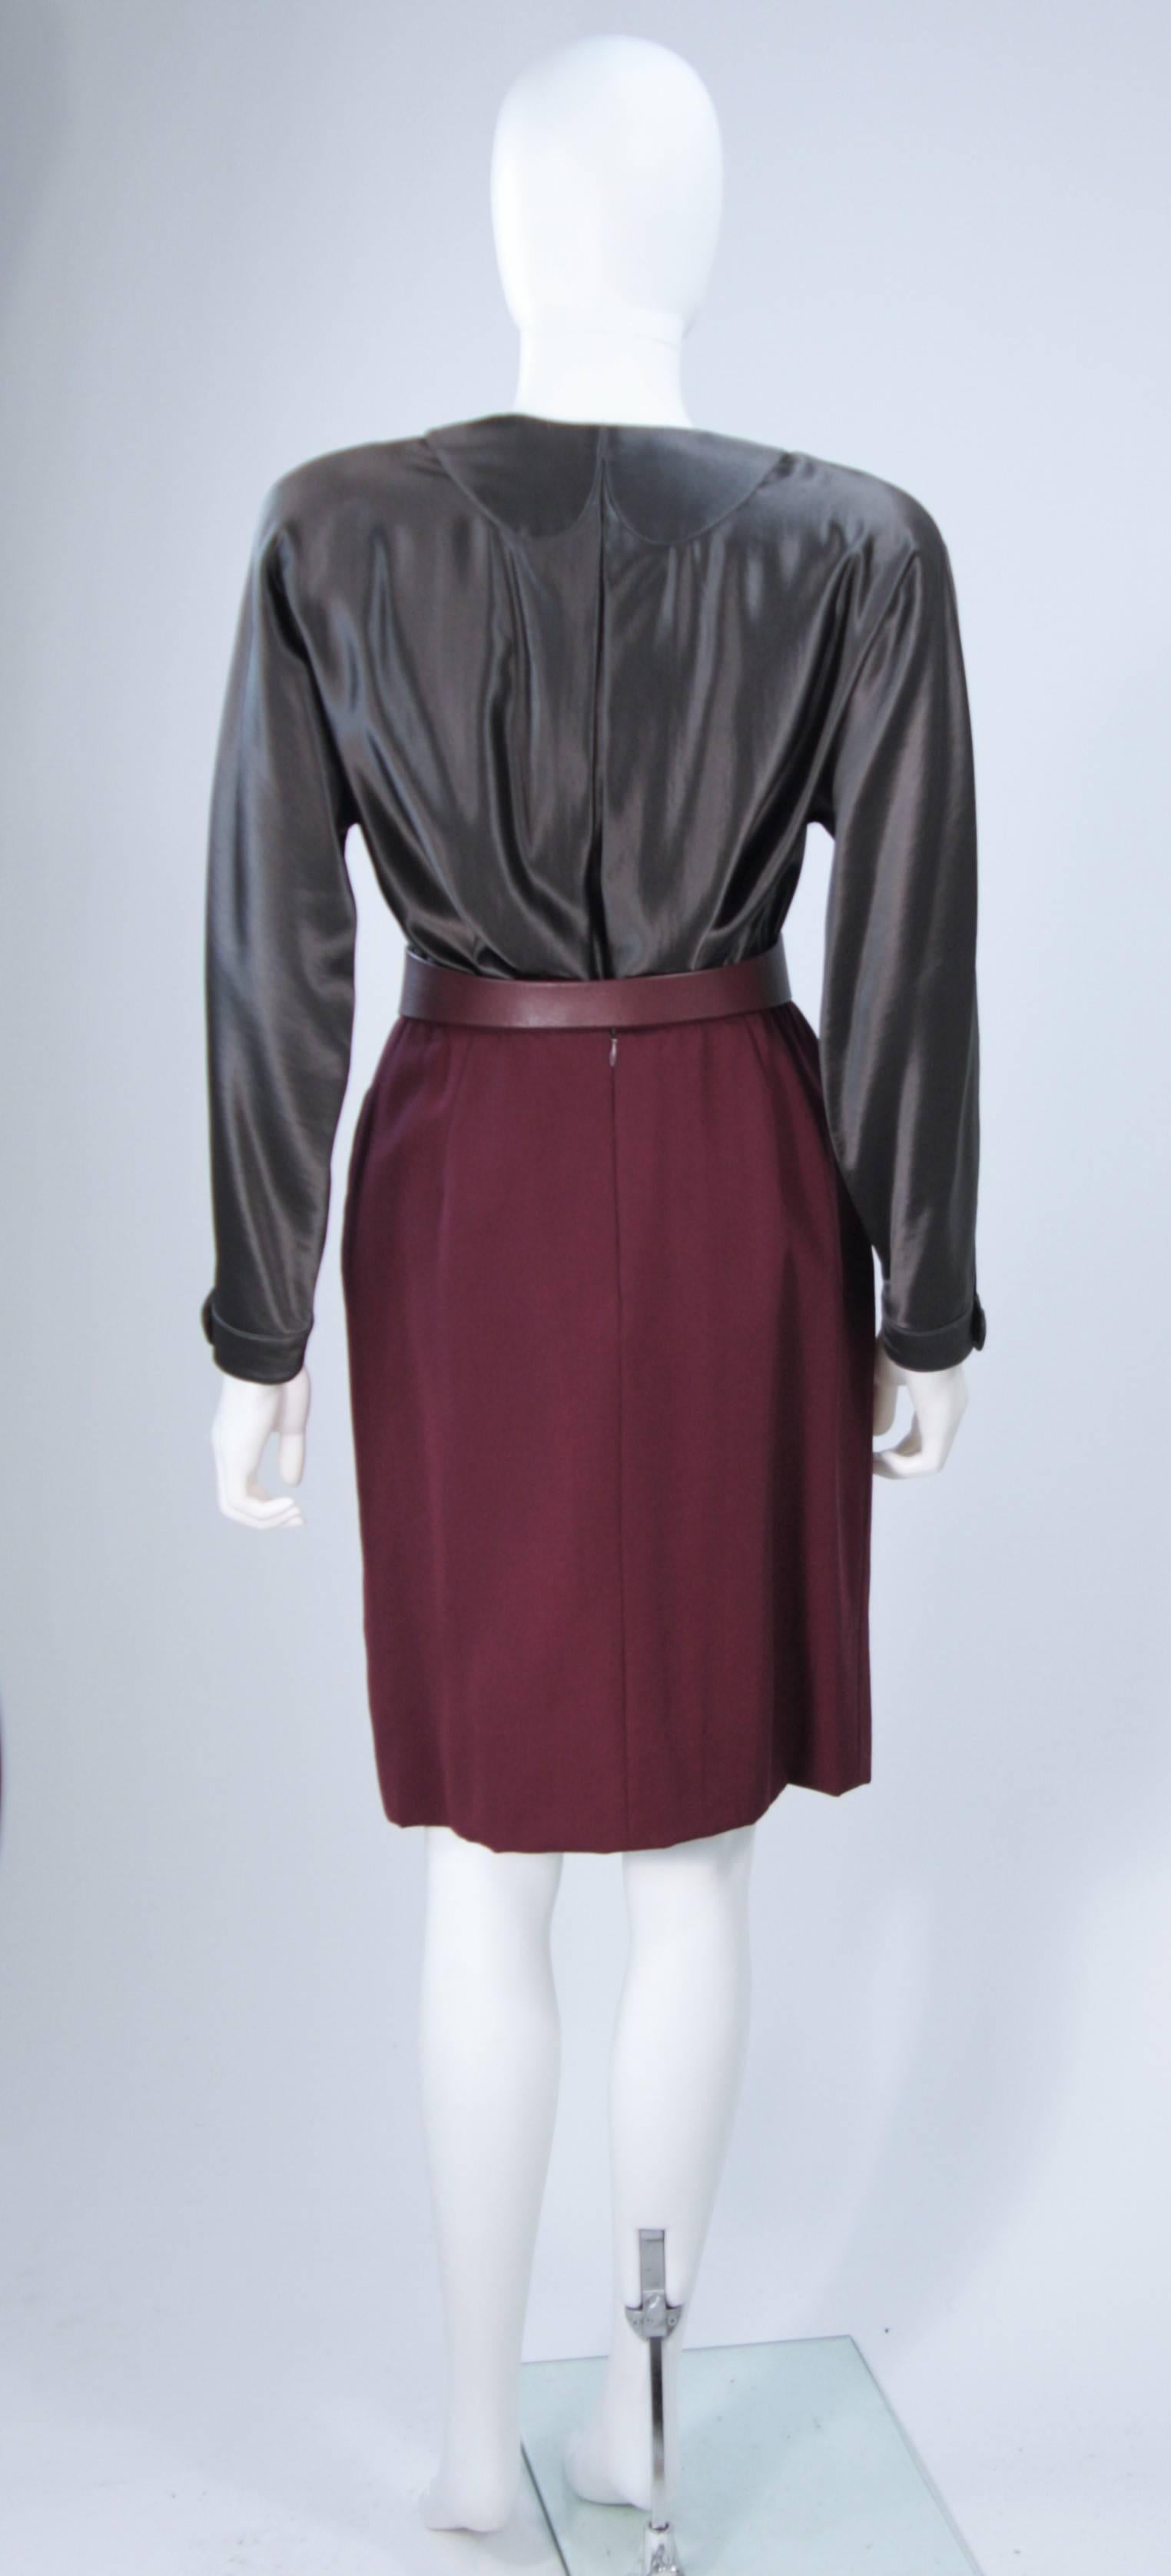 Women's GEOFFREY BEENE Burgundy Embossed Suede Skirt Suit Ensemble Size 2-4